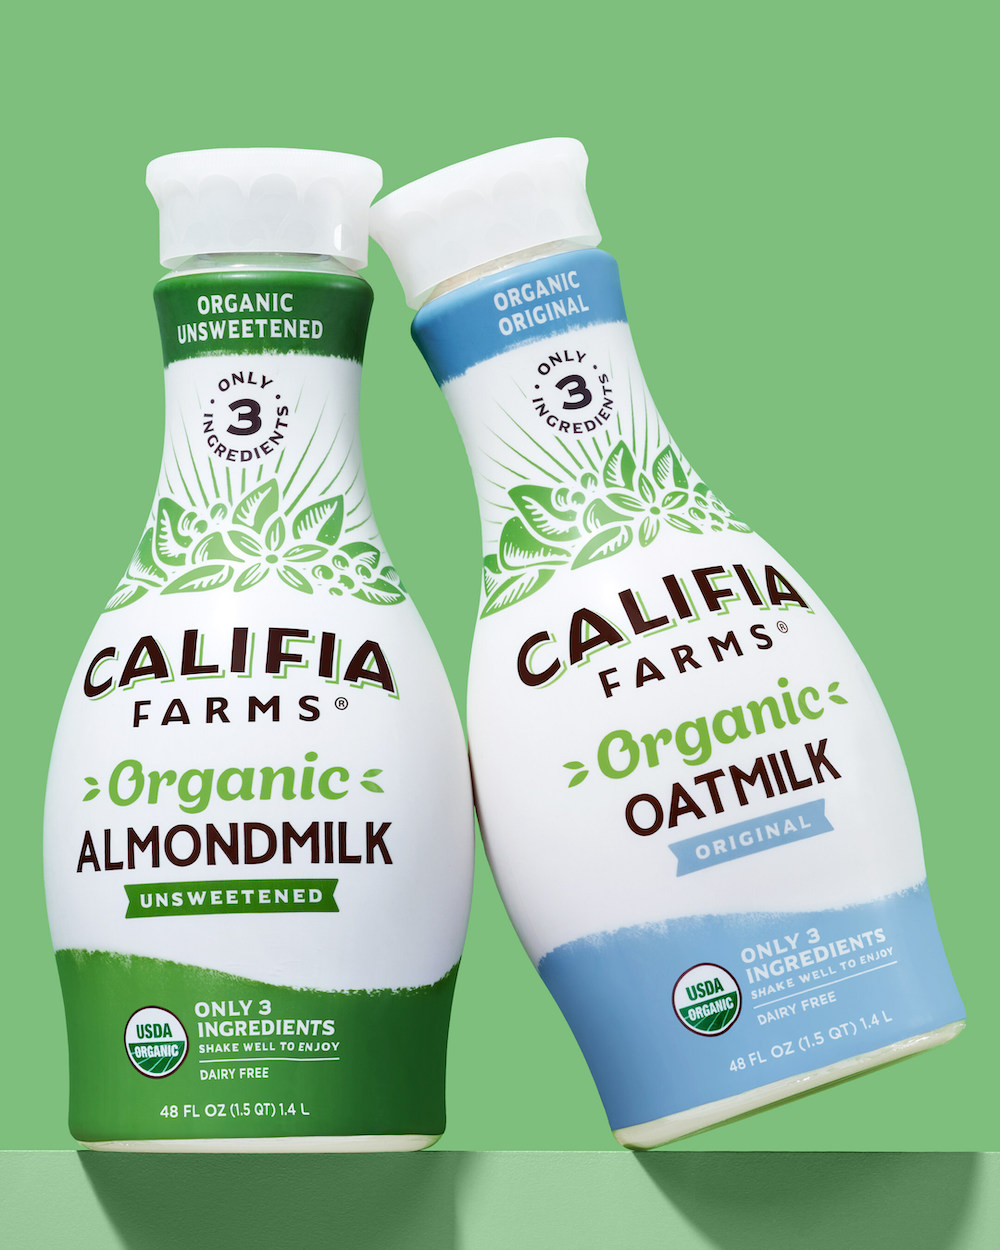 Califia Farms Organic Almondmilk and Oatmilk - new plant-based foods